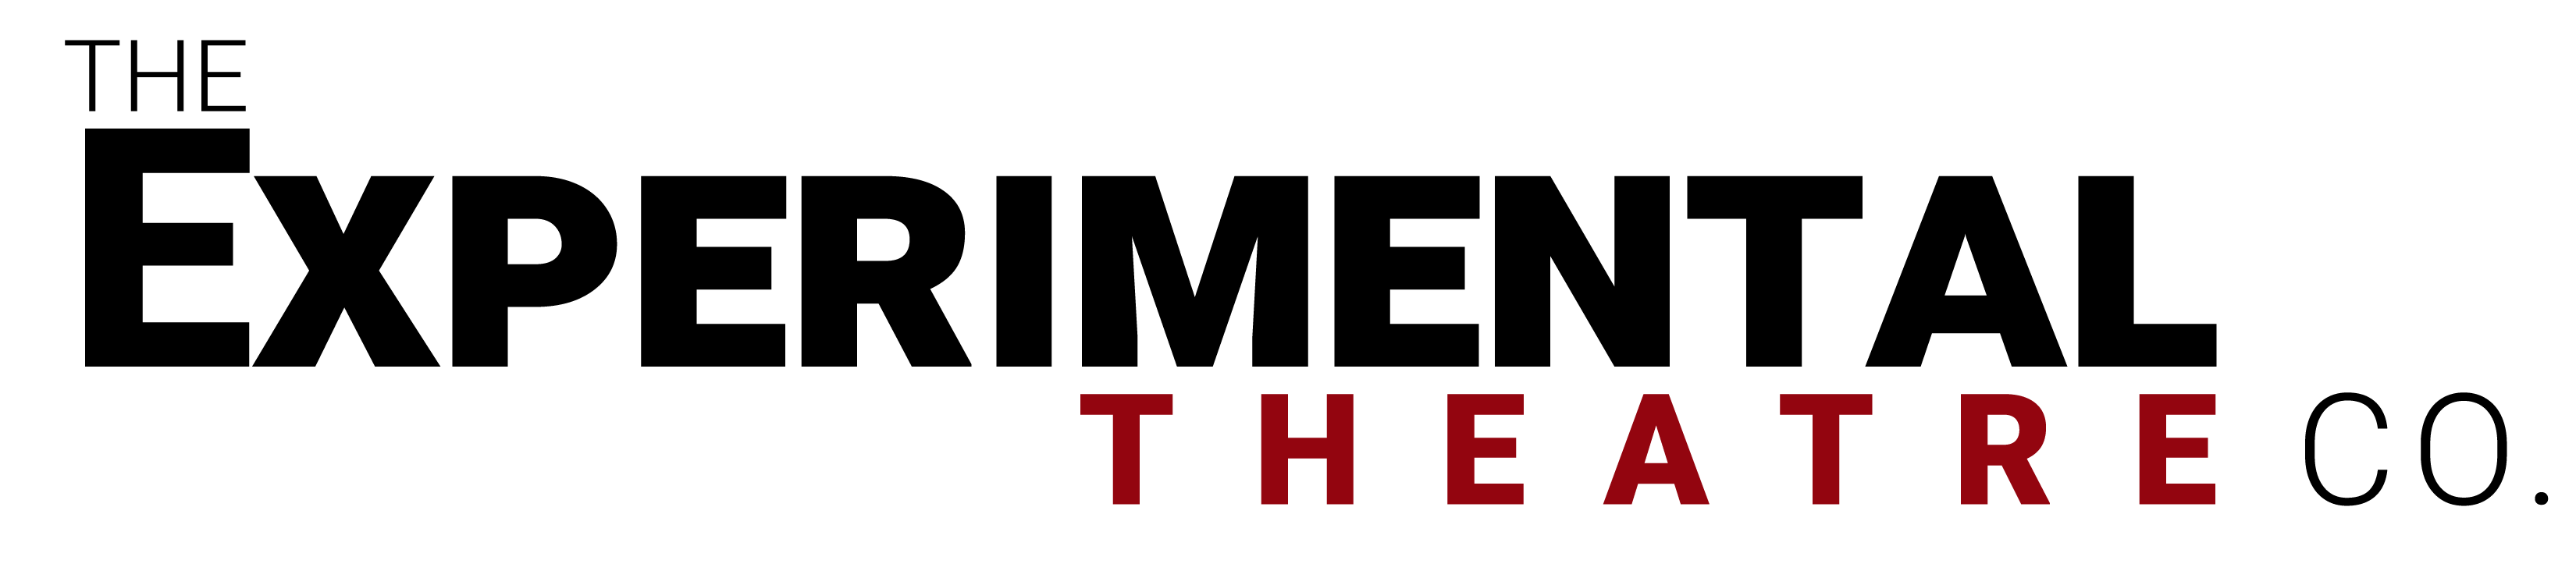 The Experimental Theatre Co. logo